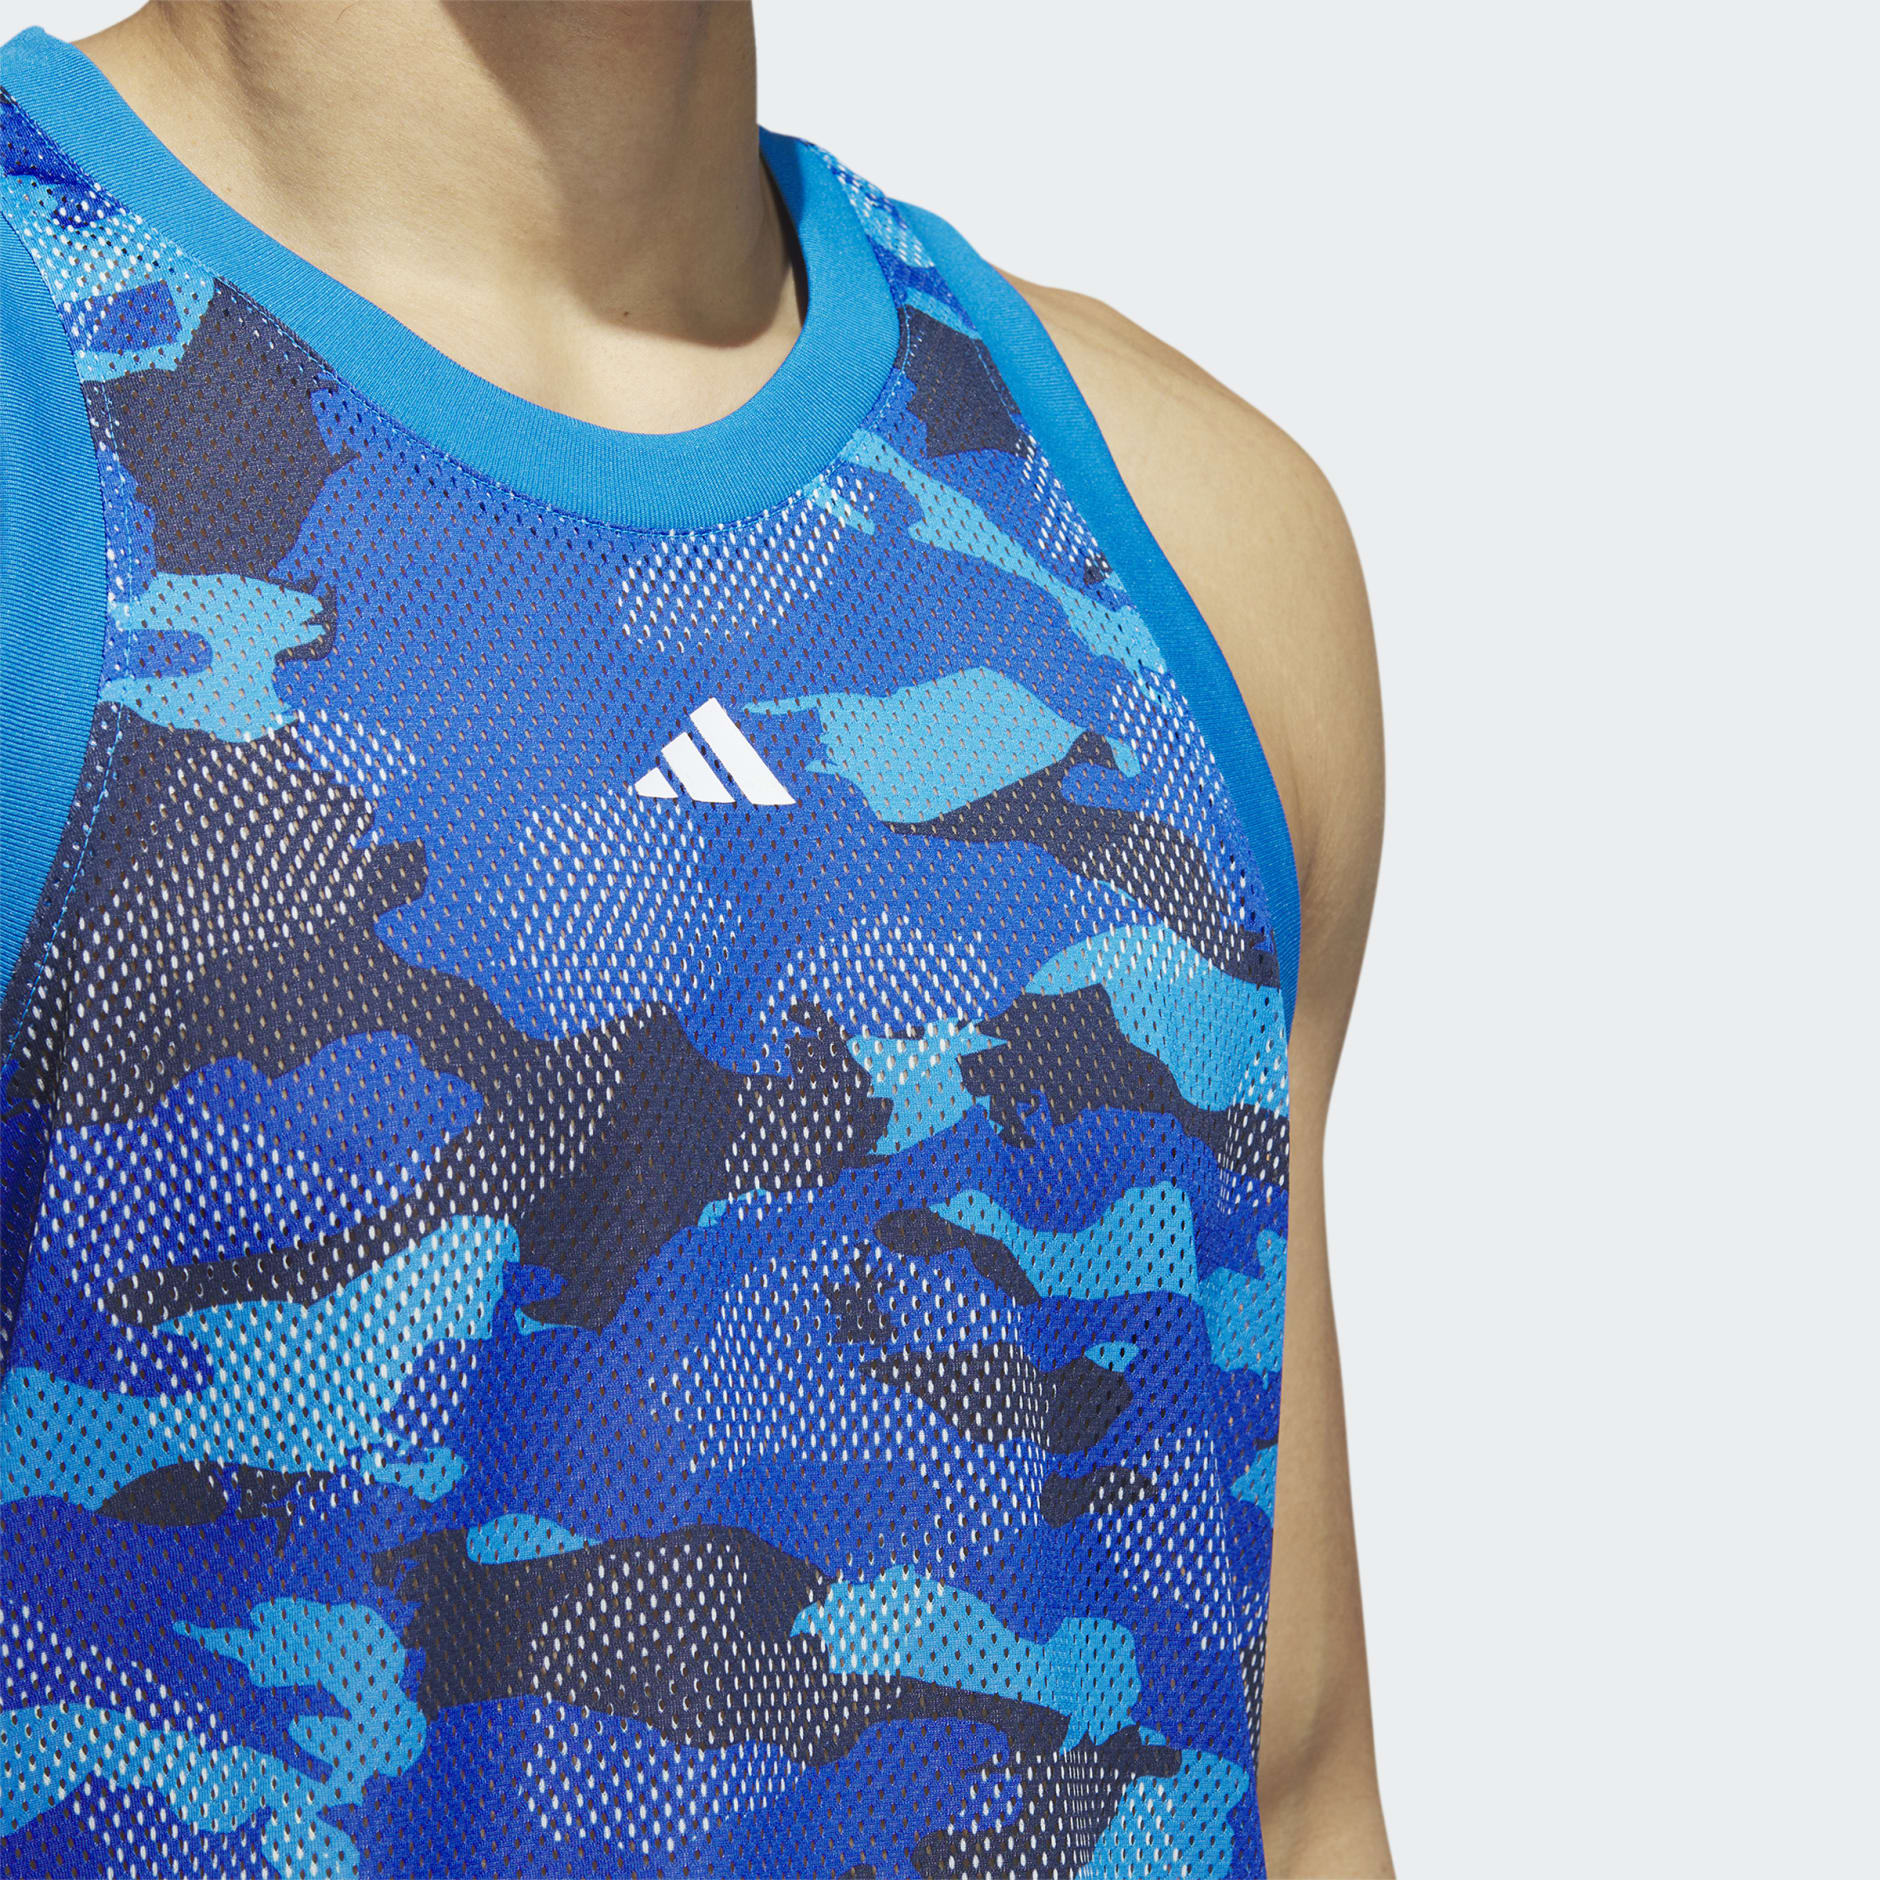 Adidas Men's Blue Tank Top